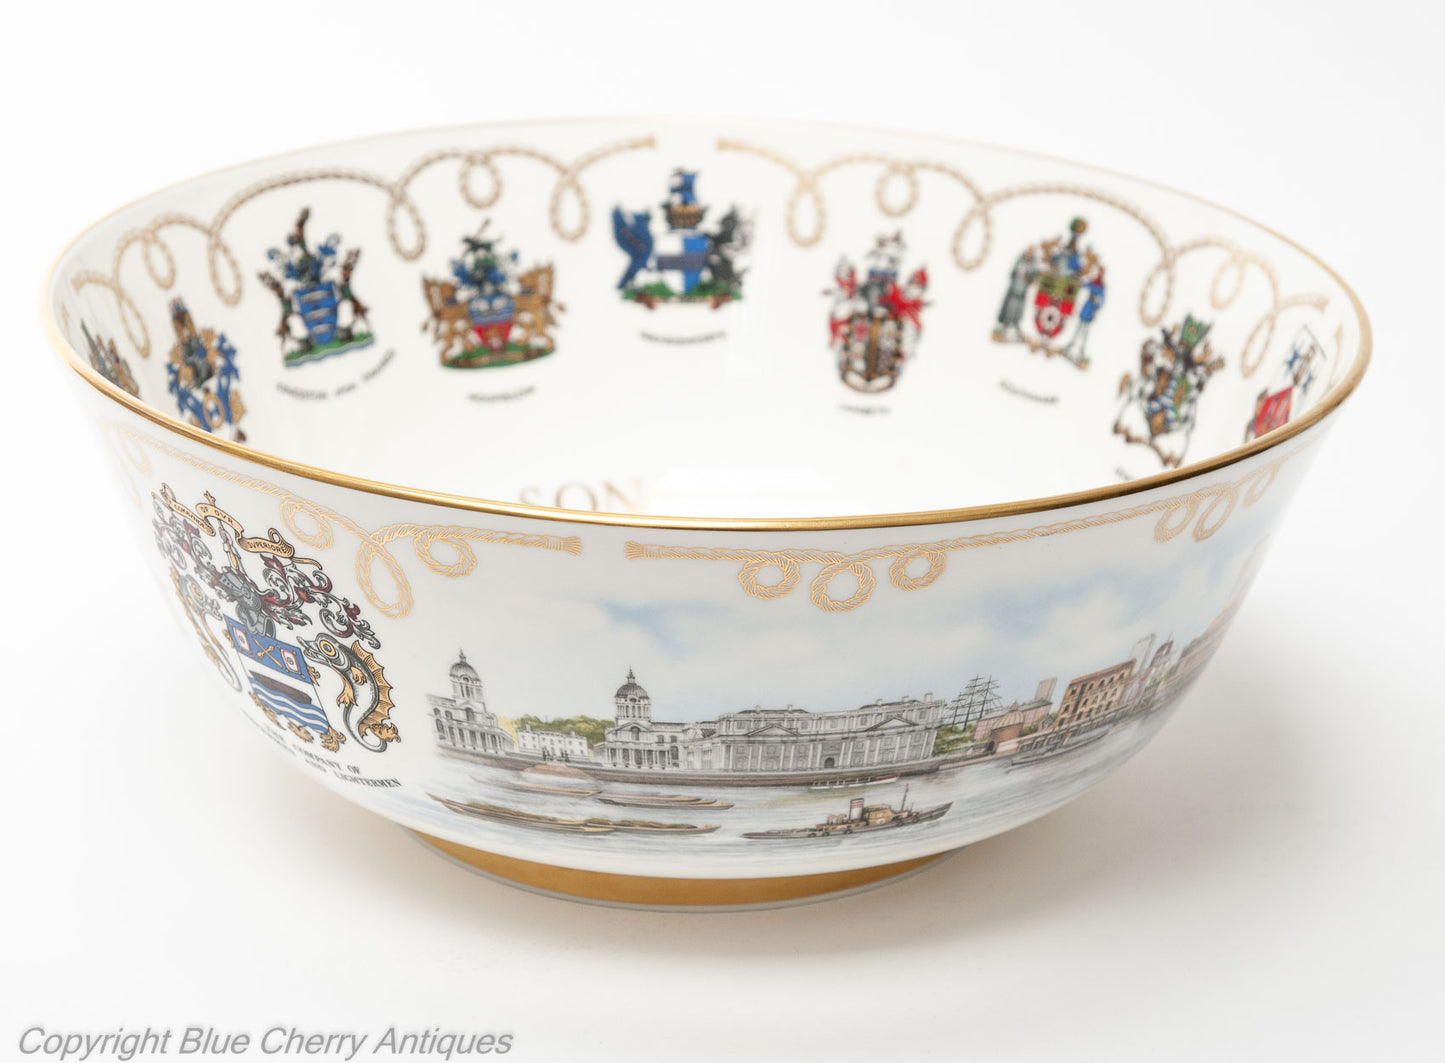 Wedgwood Limited Edition Fine Bone China ' The Thames Bowl ' - Original Box (Code 1741)